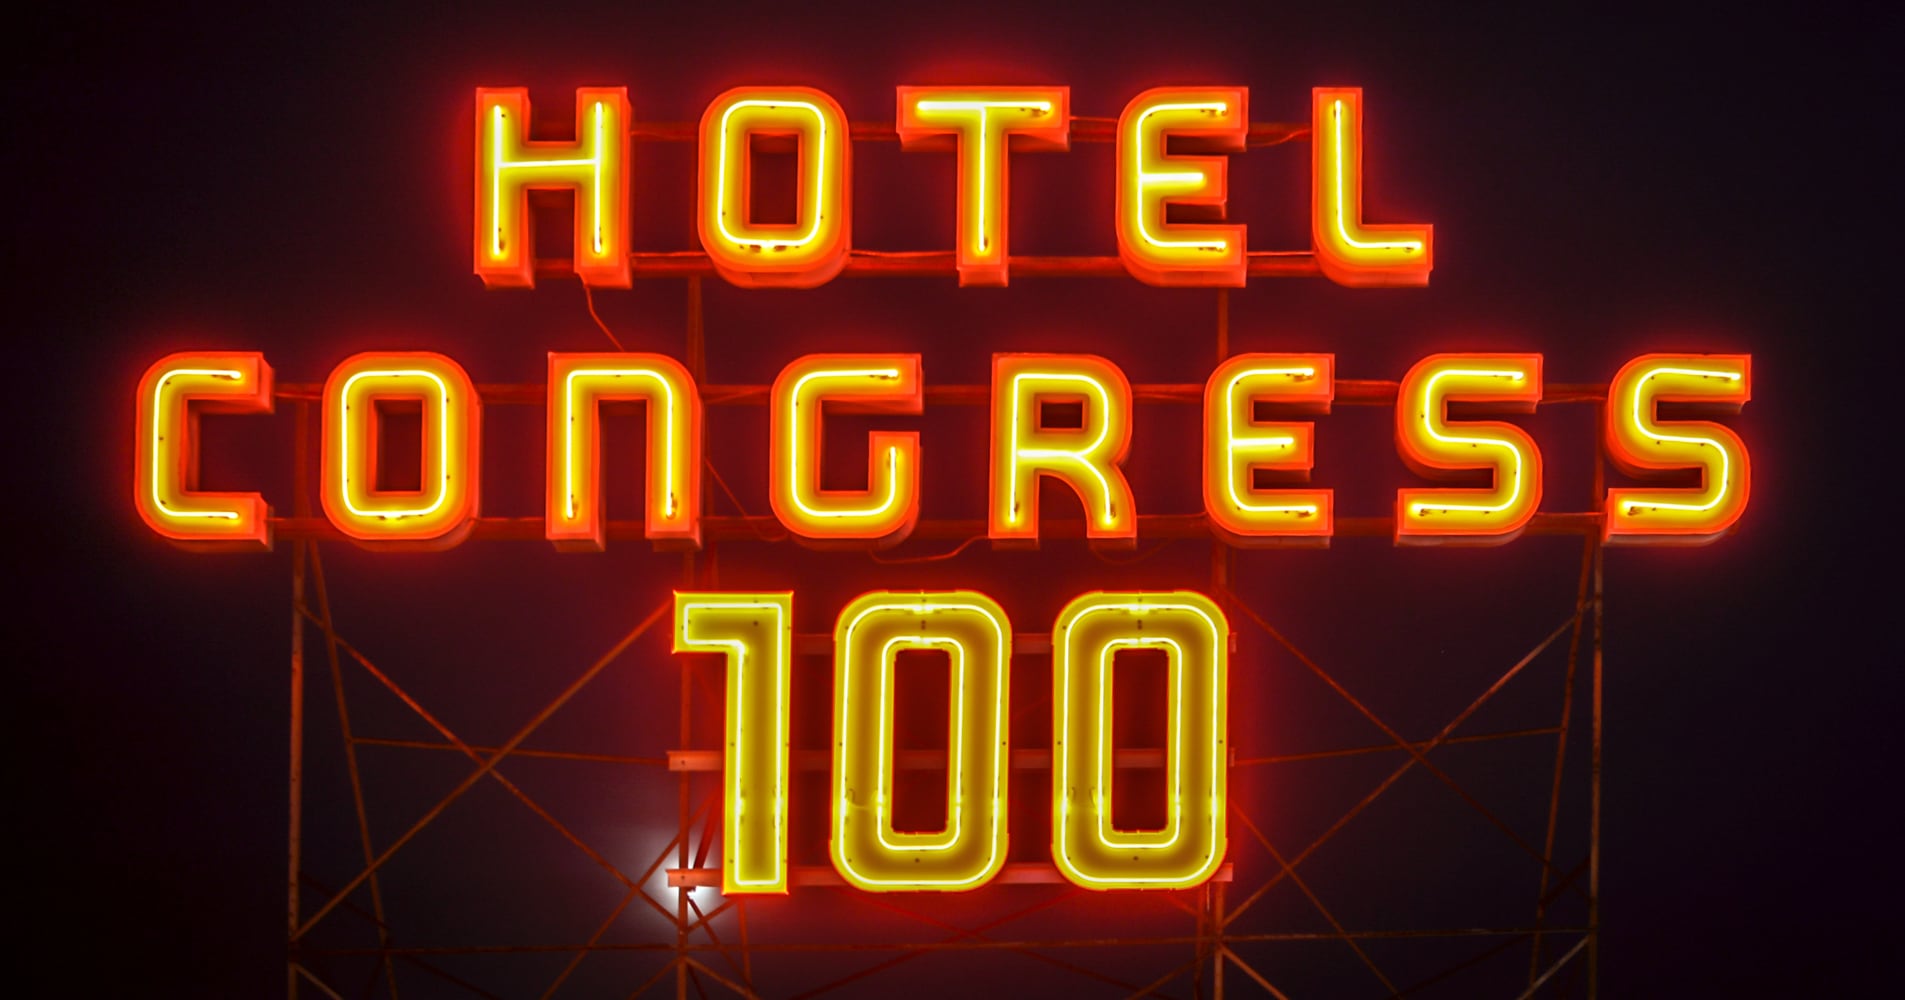 (c) Hotelcongress.com